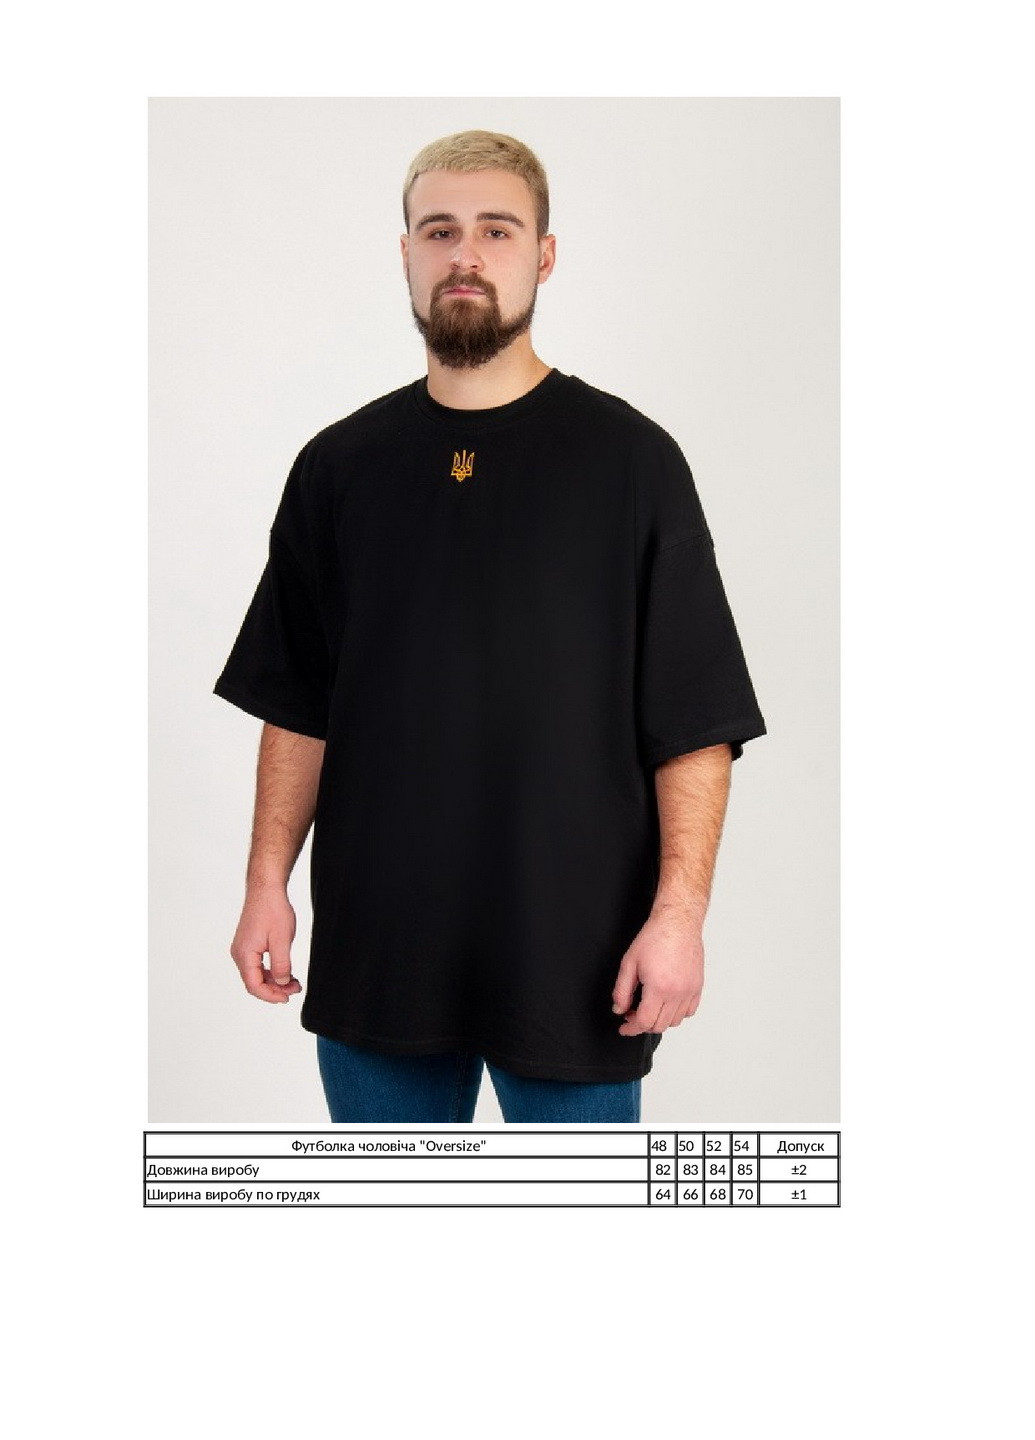 Чорна футболка чоловіча "оversize" KINDER MODE